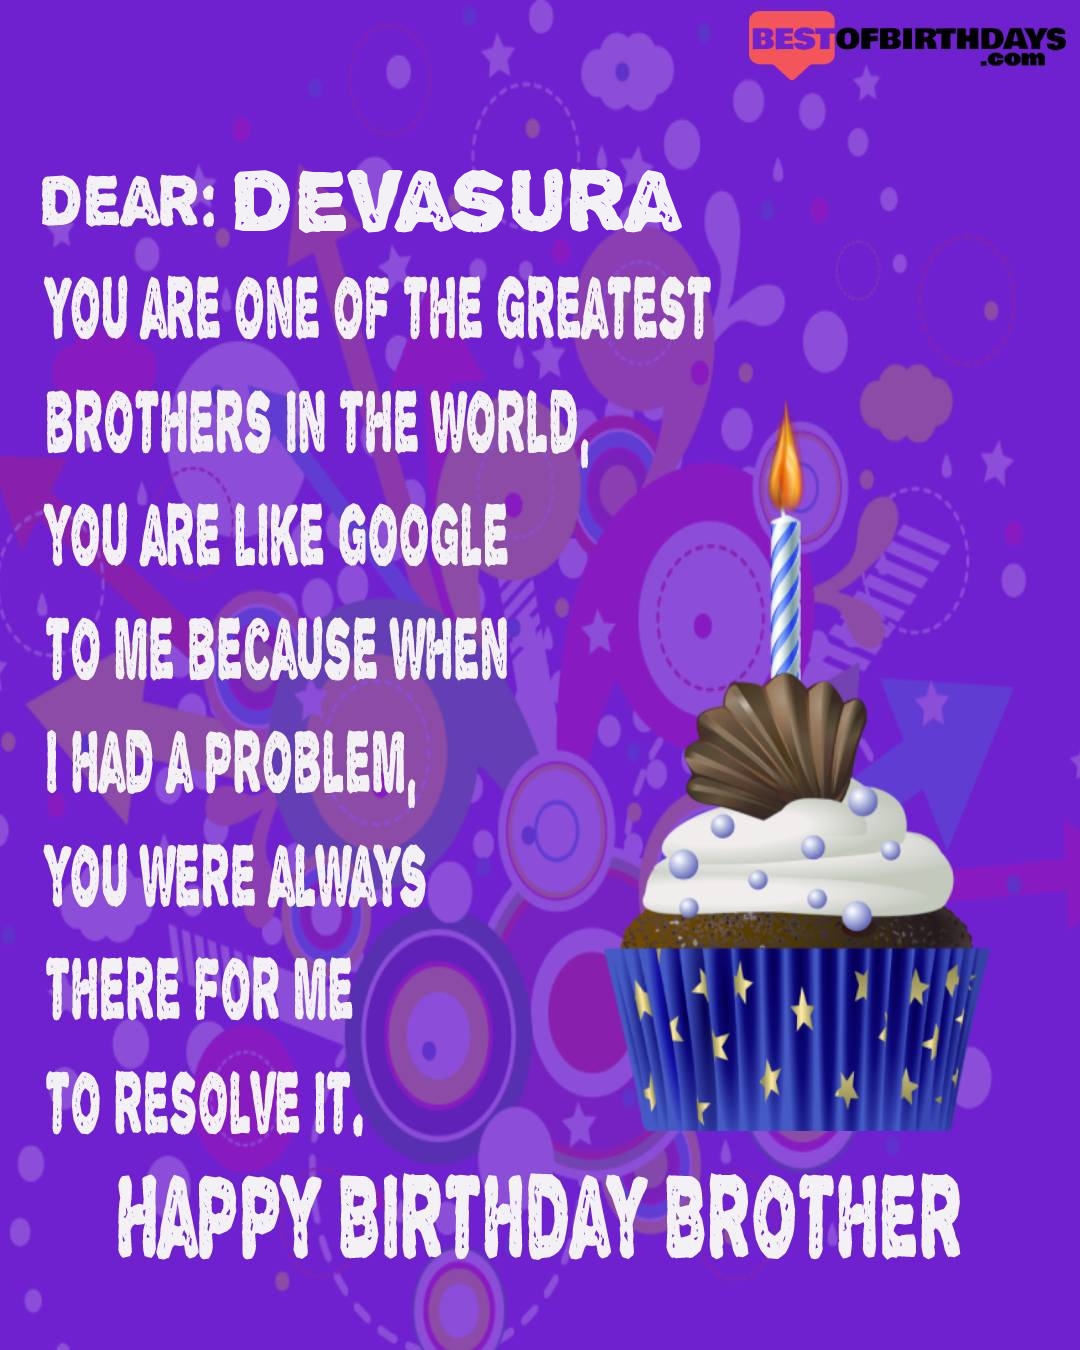 Happy birthday devasura bhai brother bro